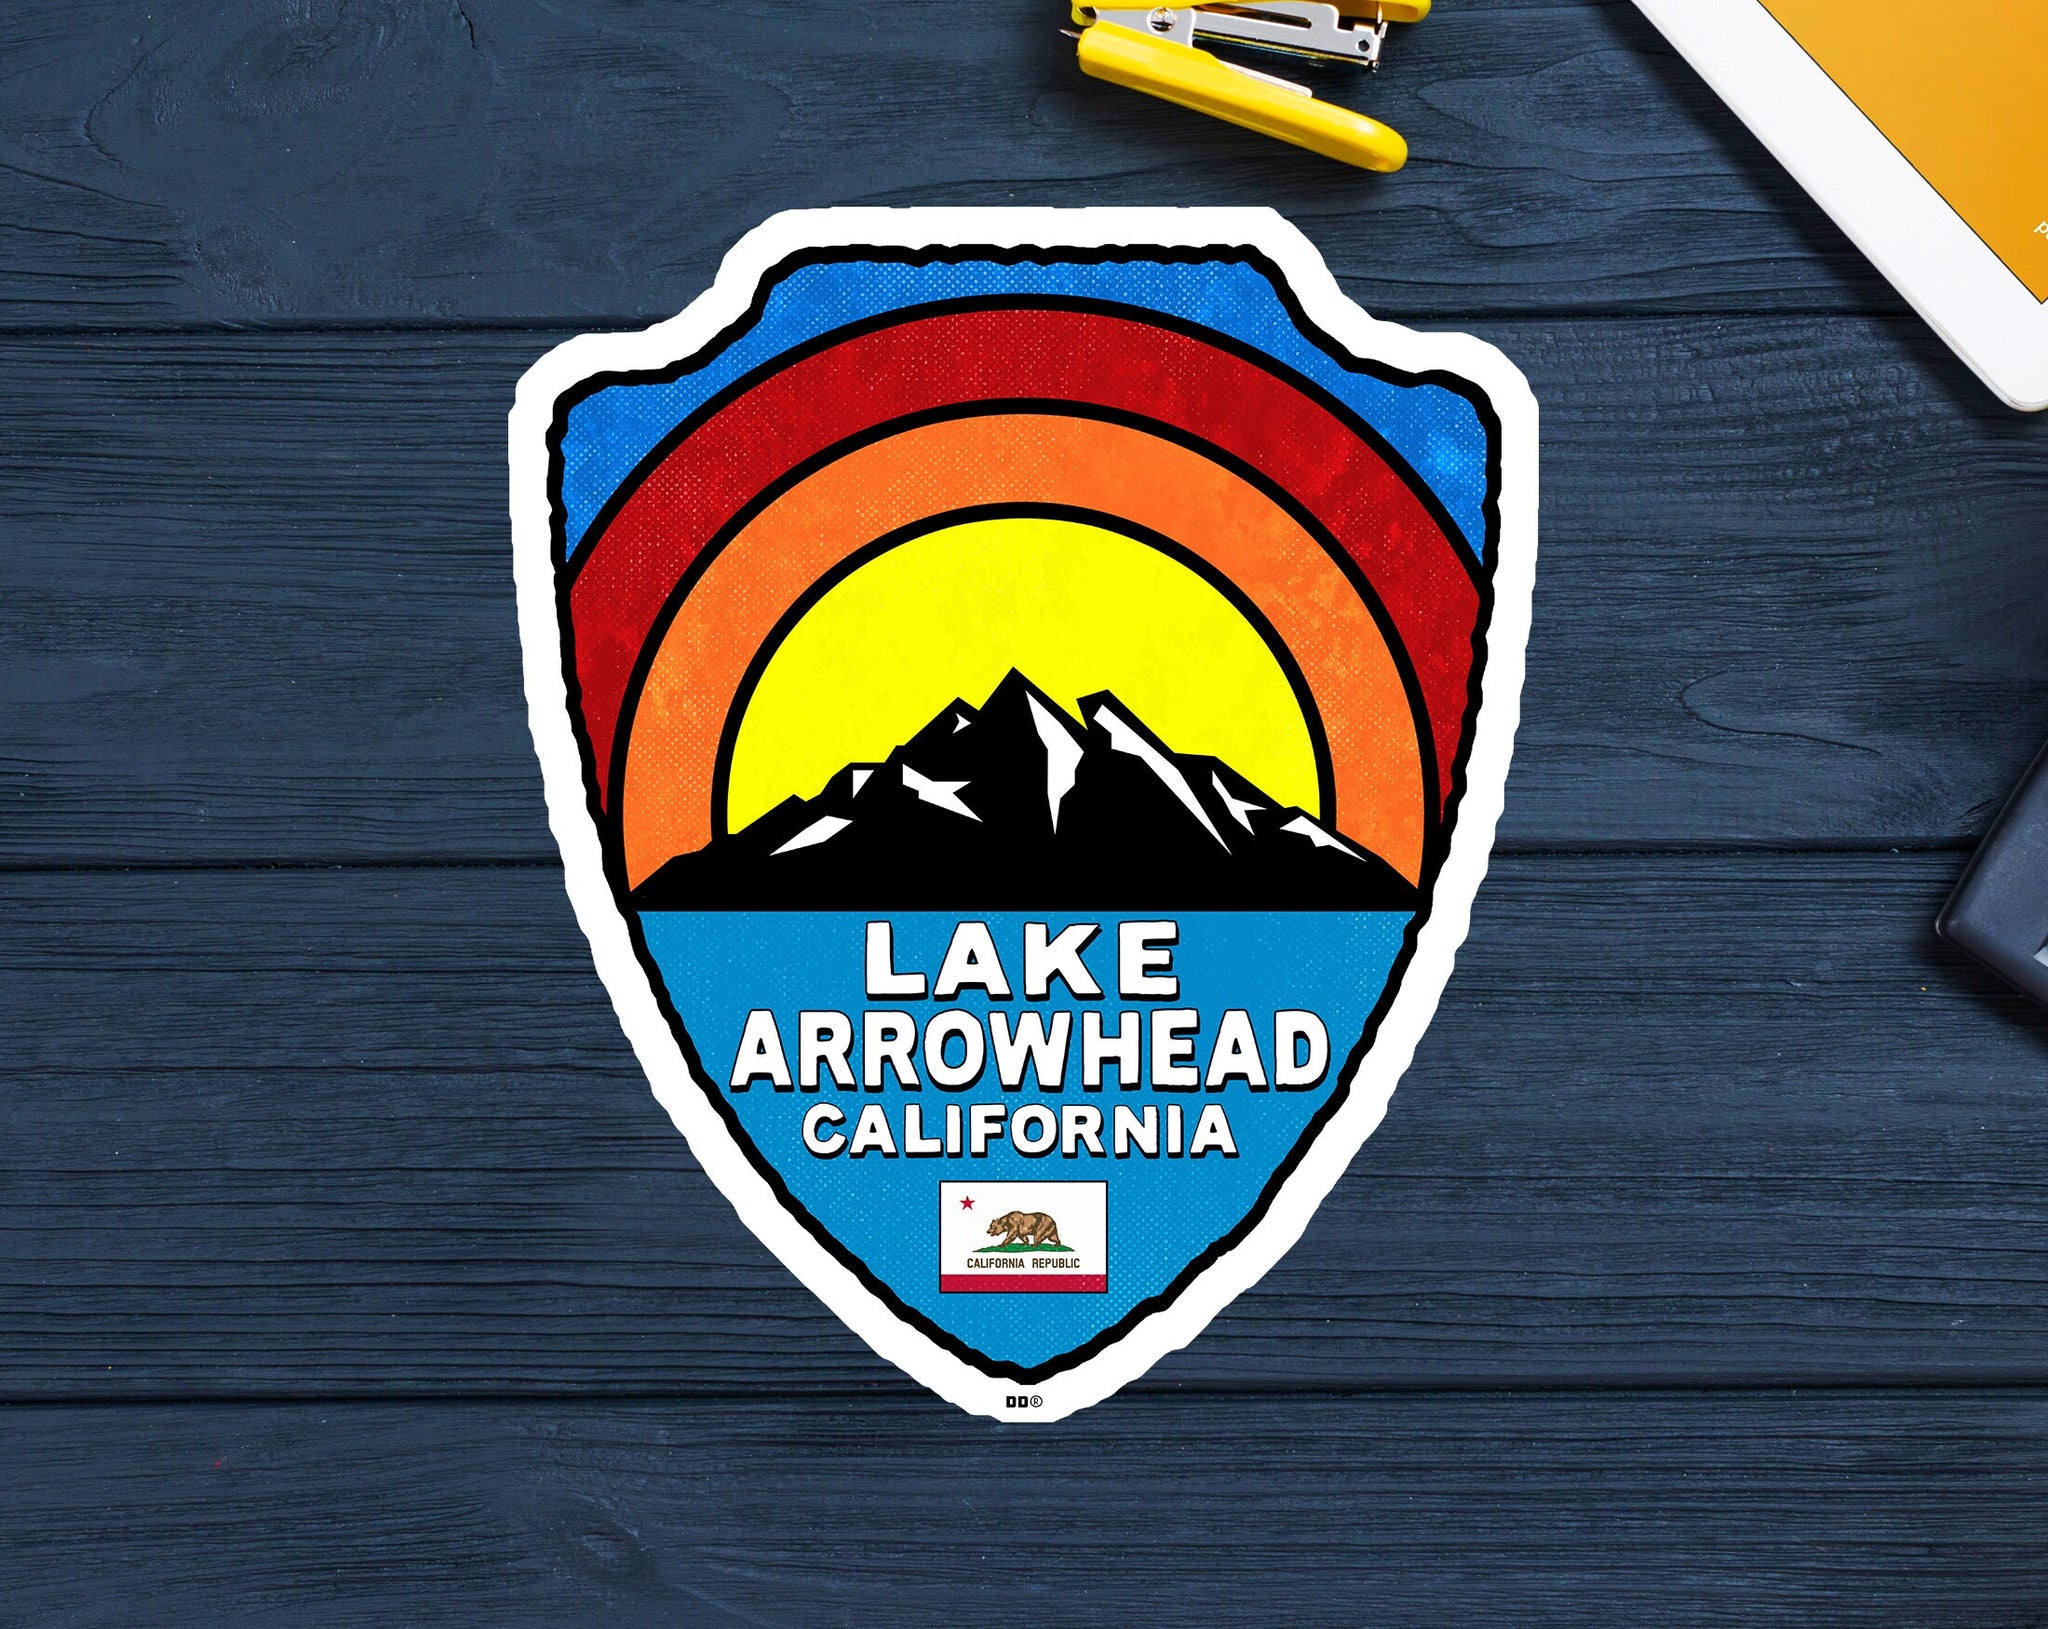 Arrowhead Lake Vinyl Decal Sticker California 2.75" x 3.25"